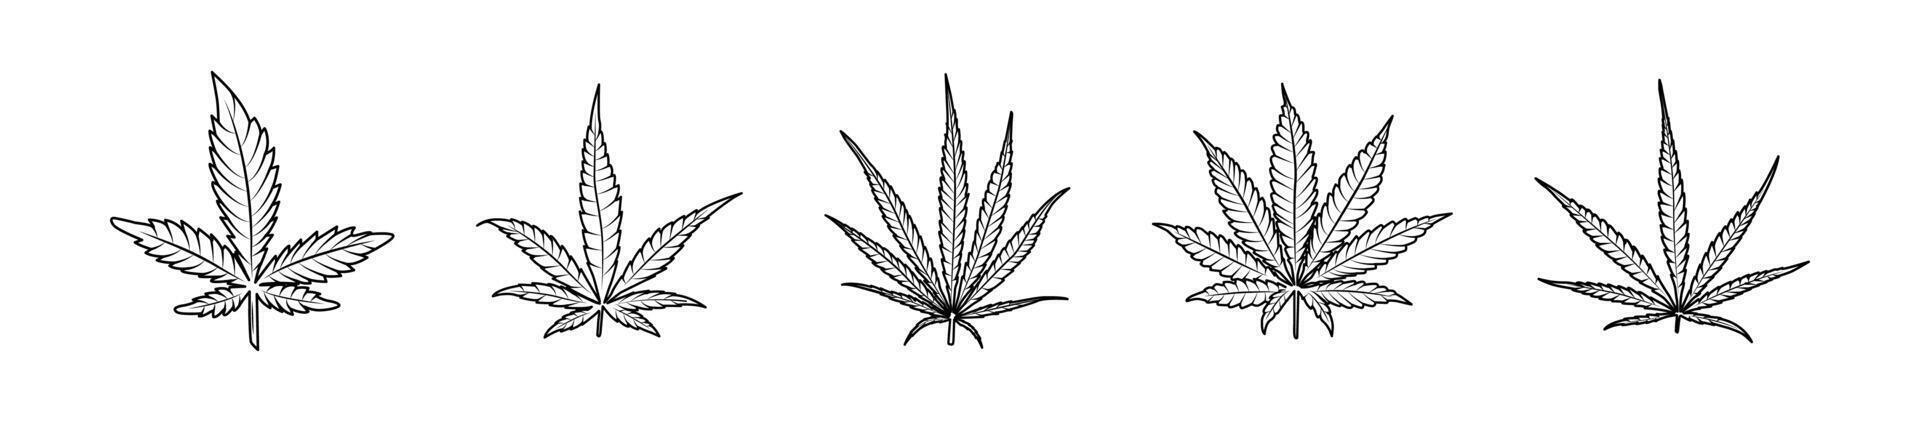 Cannabis icons. Marijuana icons. Cannabis plants vector